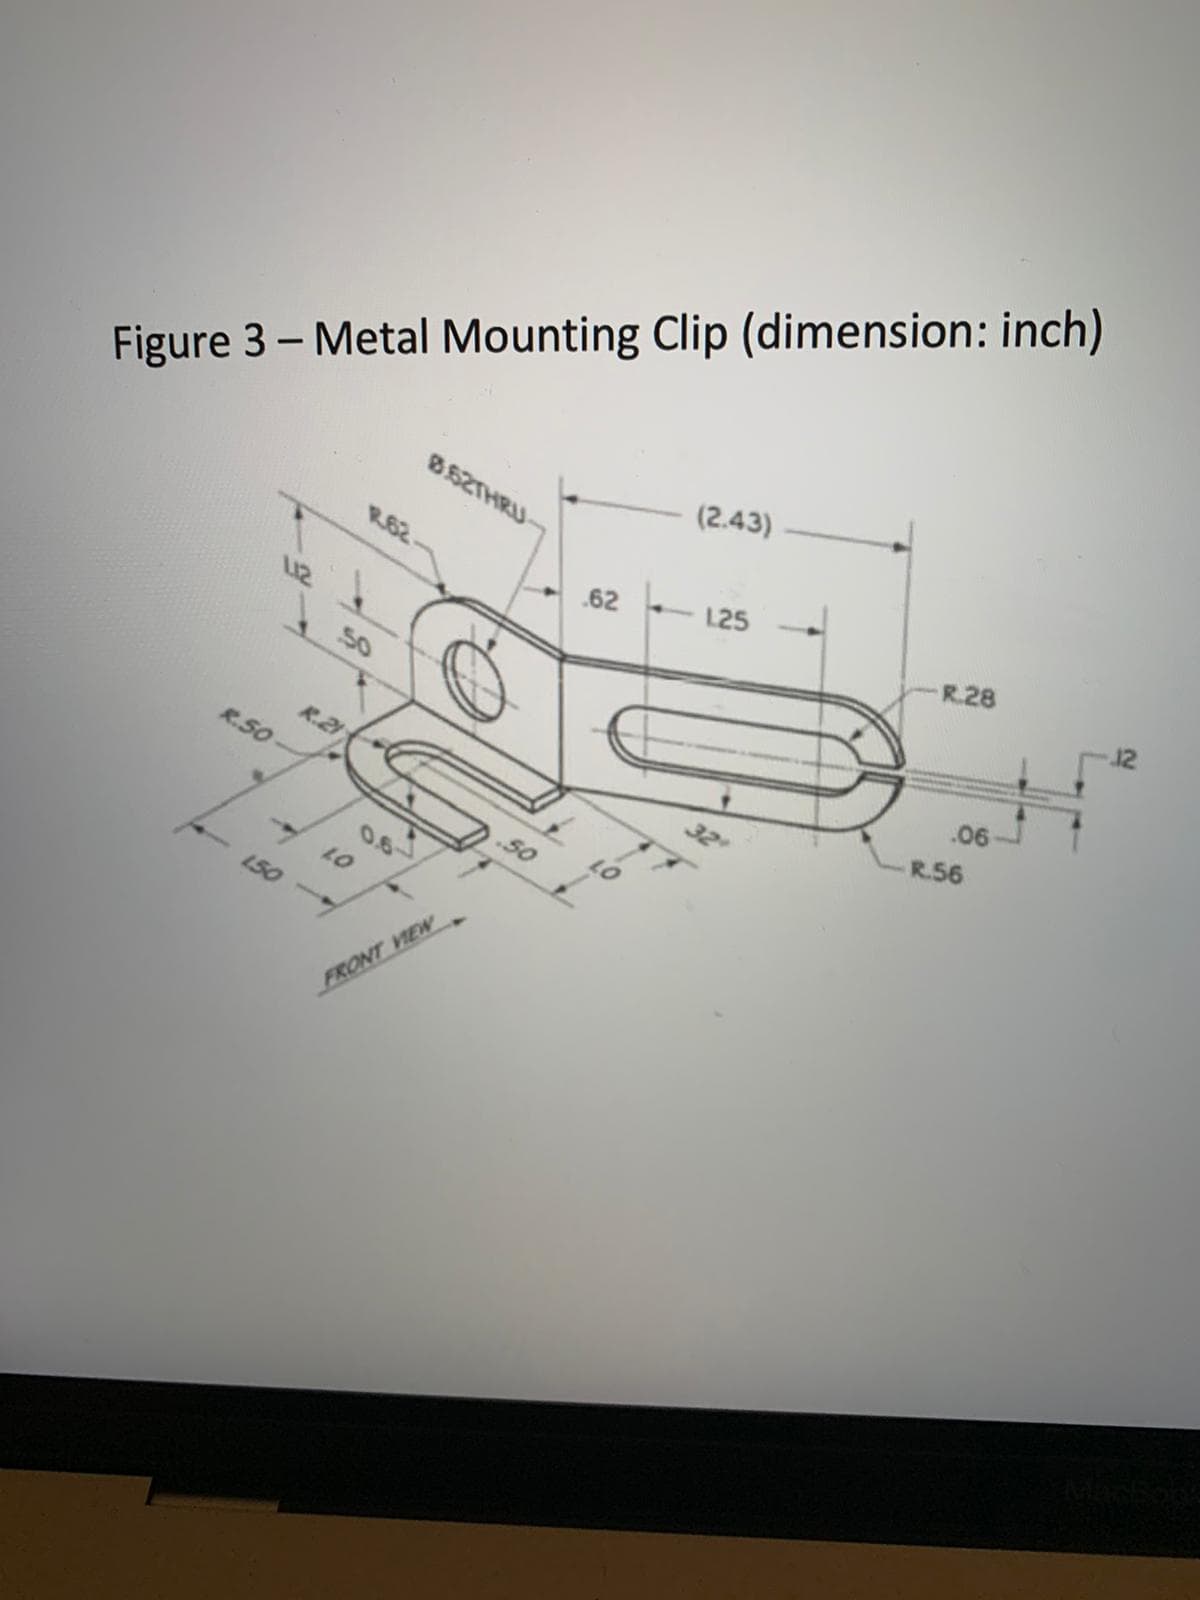 Figure 3 - Metal Mounting Clip (dimension: inch)
952THRU
(2.43)
R.62
L25
62
R.28
50
06
R.2
R.56
R.SO
50
0.6
150
FRONT VIEW
